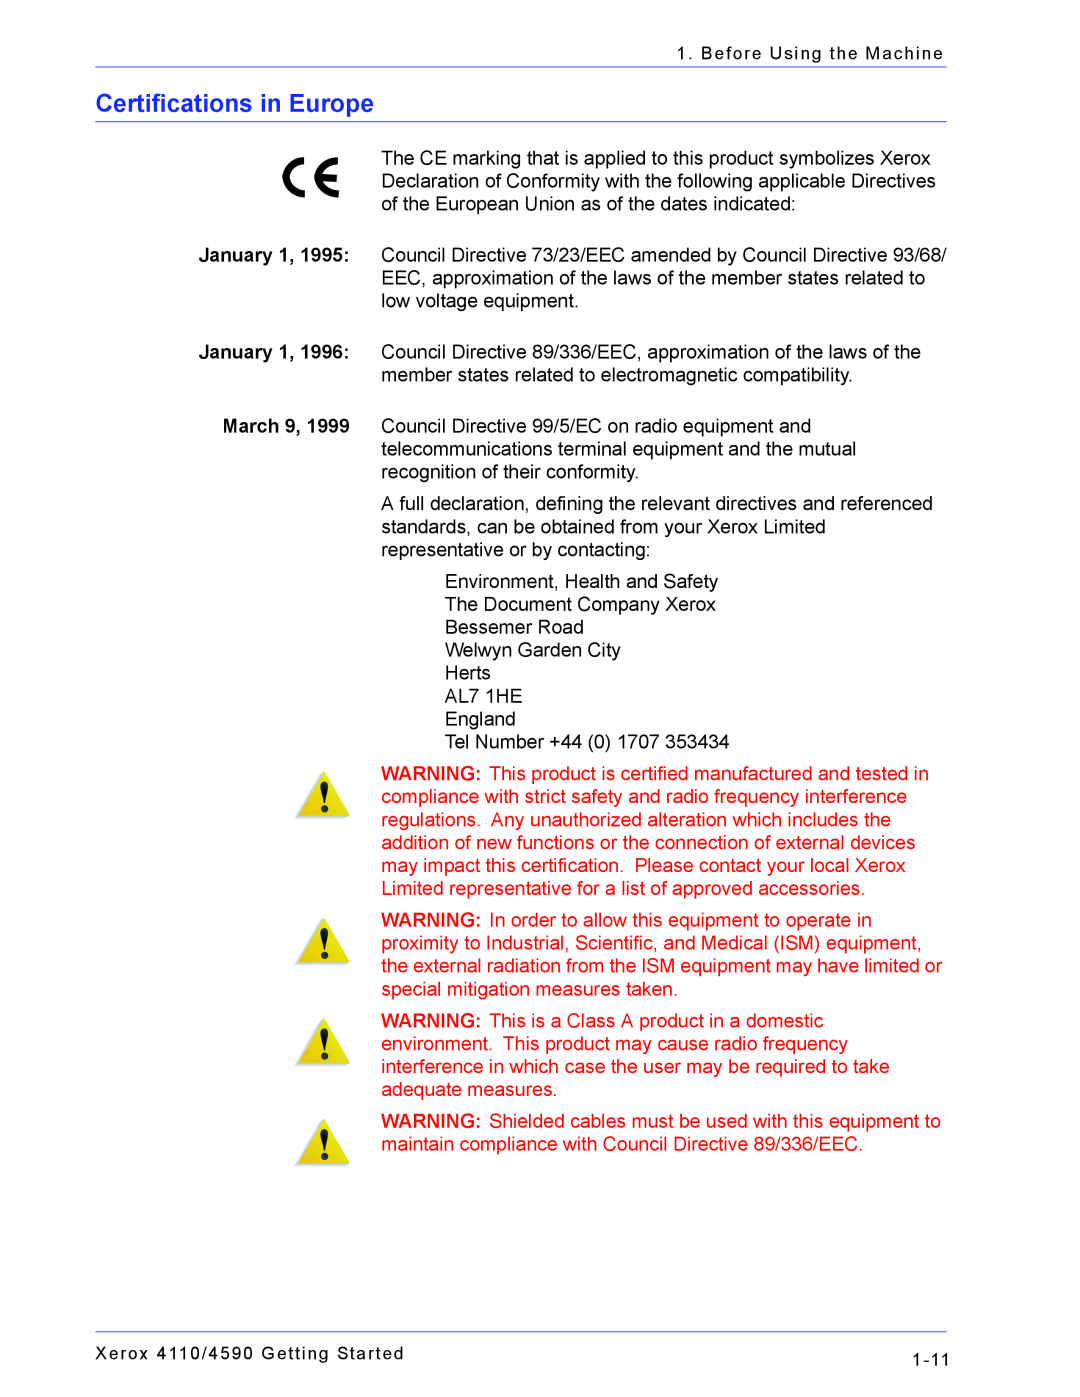 Xerox 4110, 4590 manual Certifications in Europe 